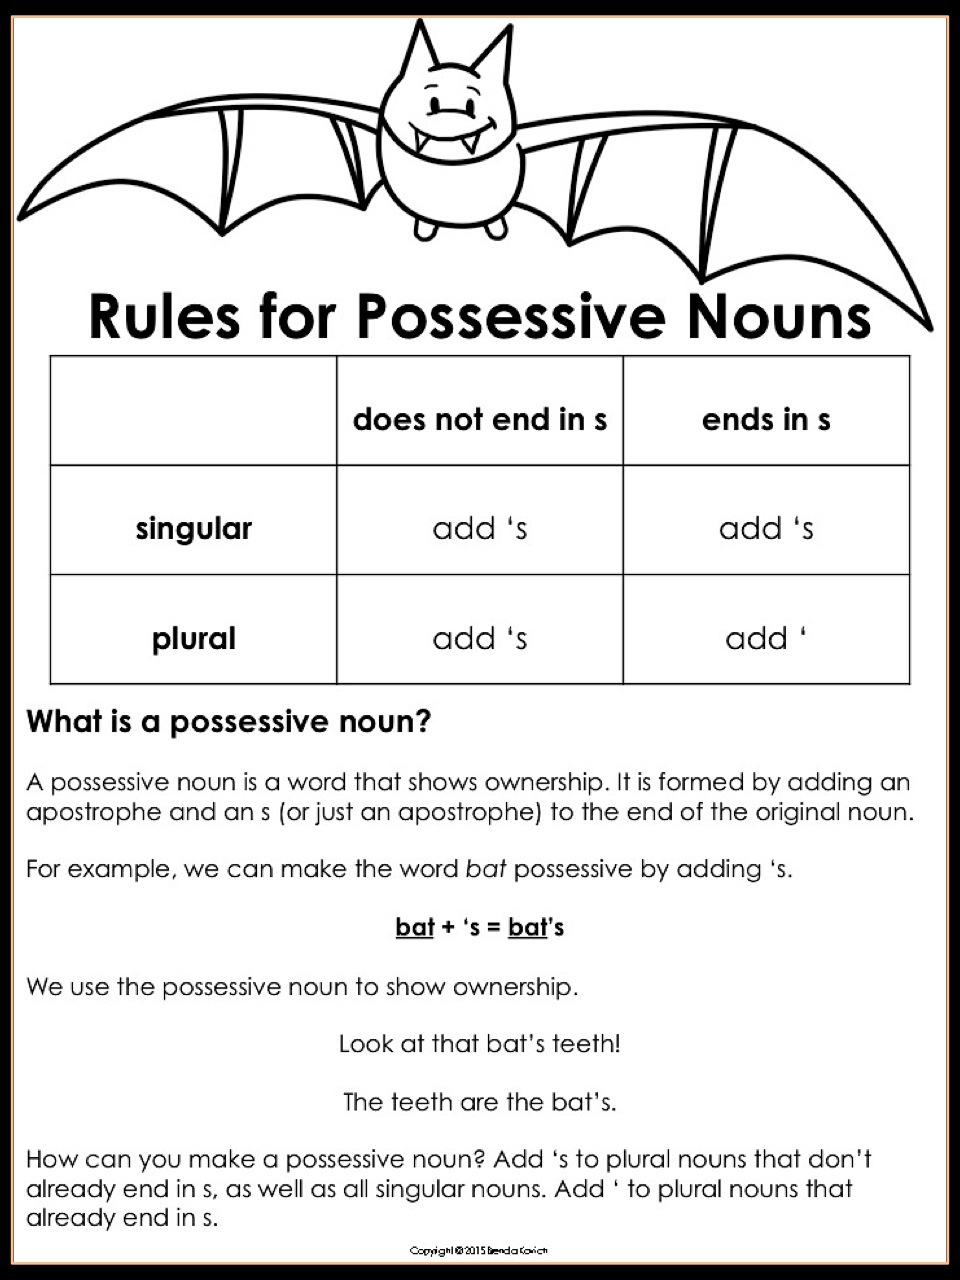 teaching-possessive-nouns-in-three-days-enjoy-teaching